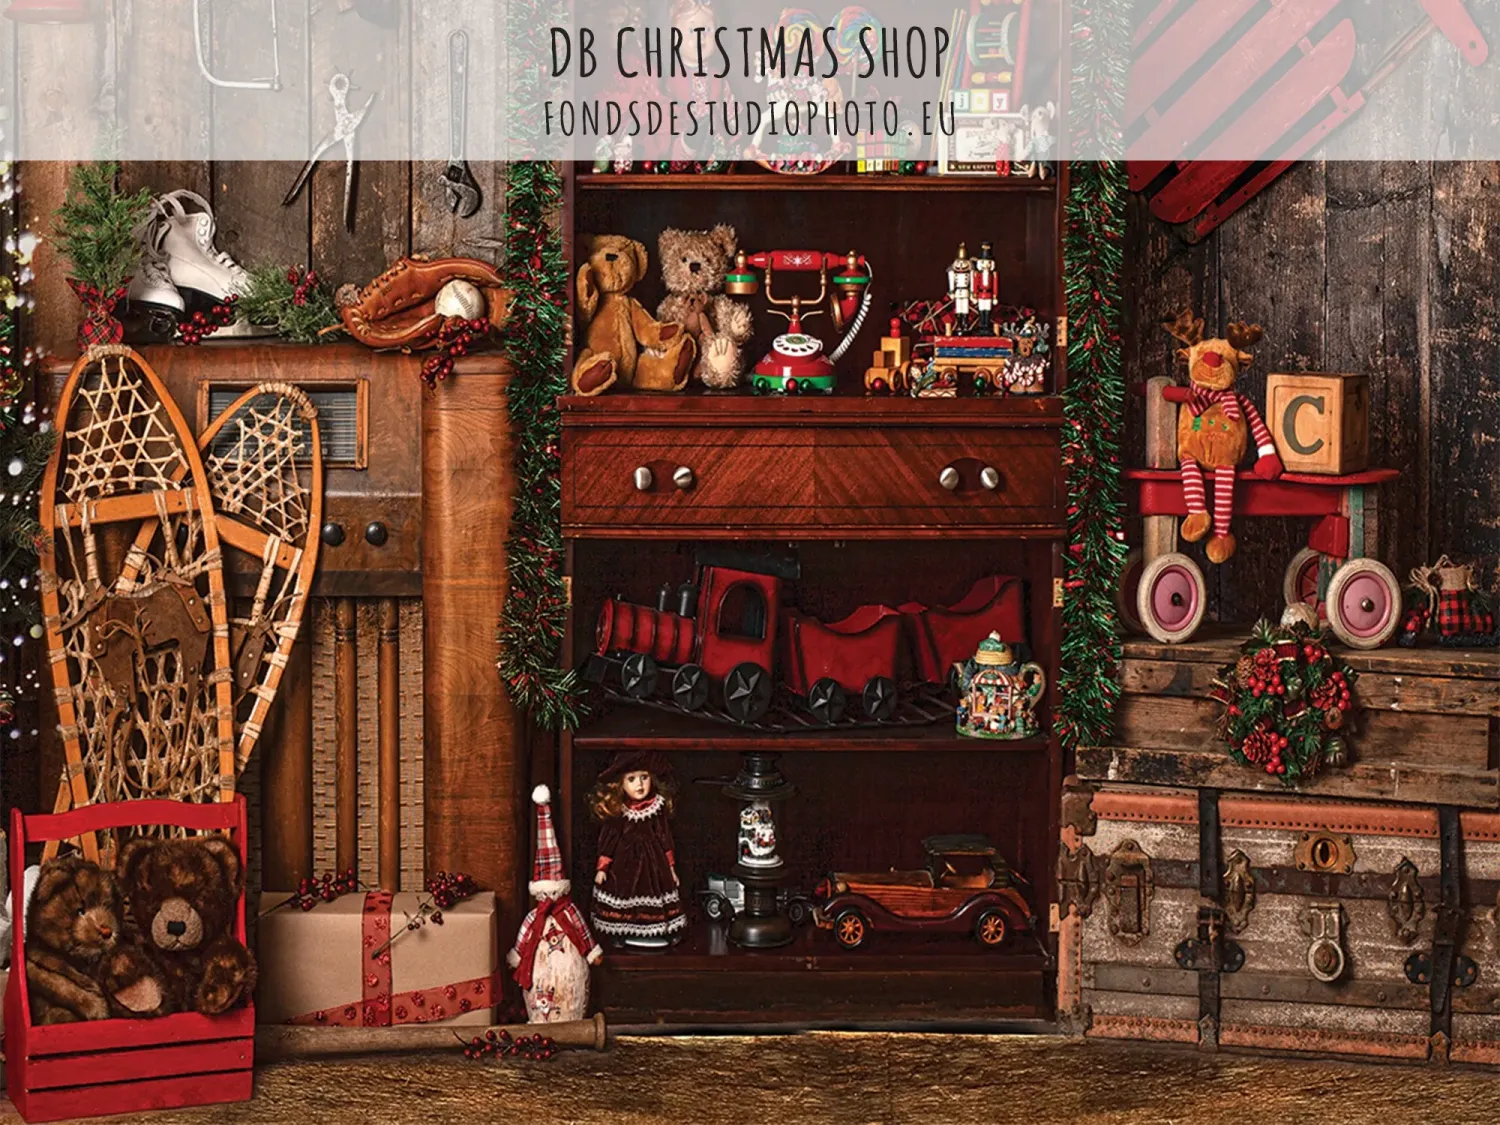 DB Christmas Shop